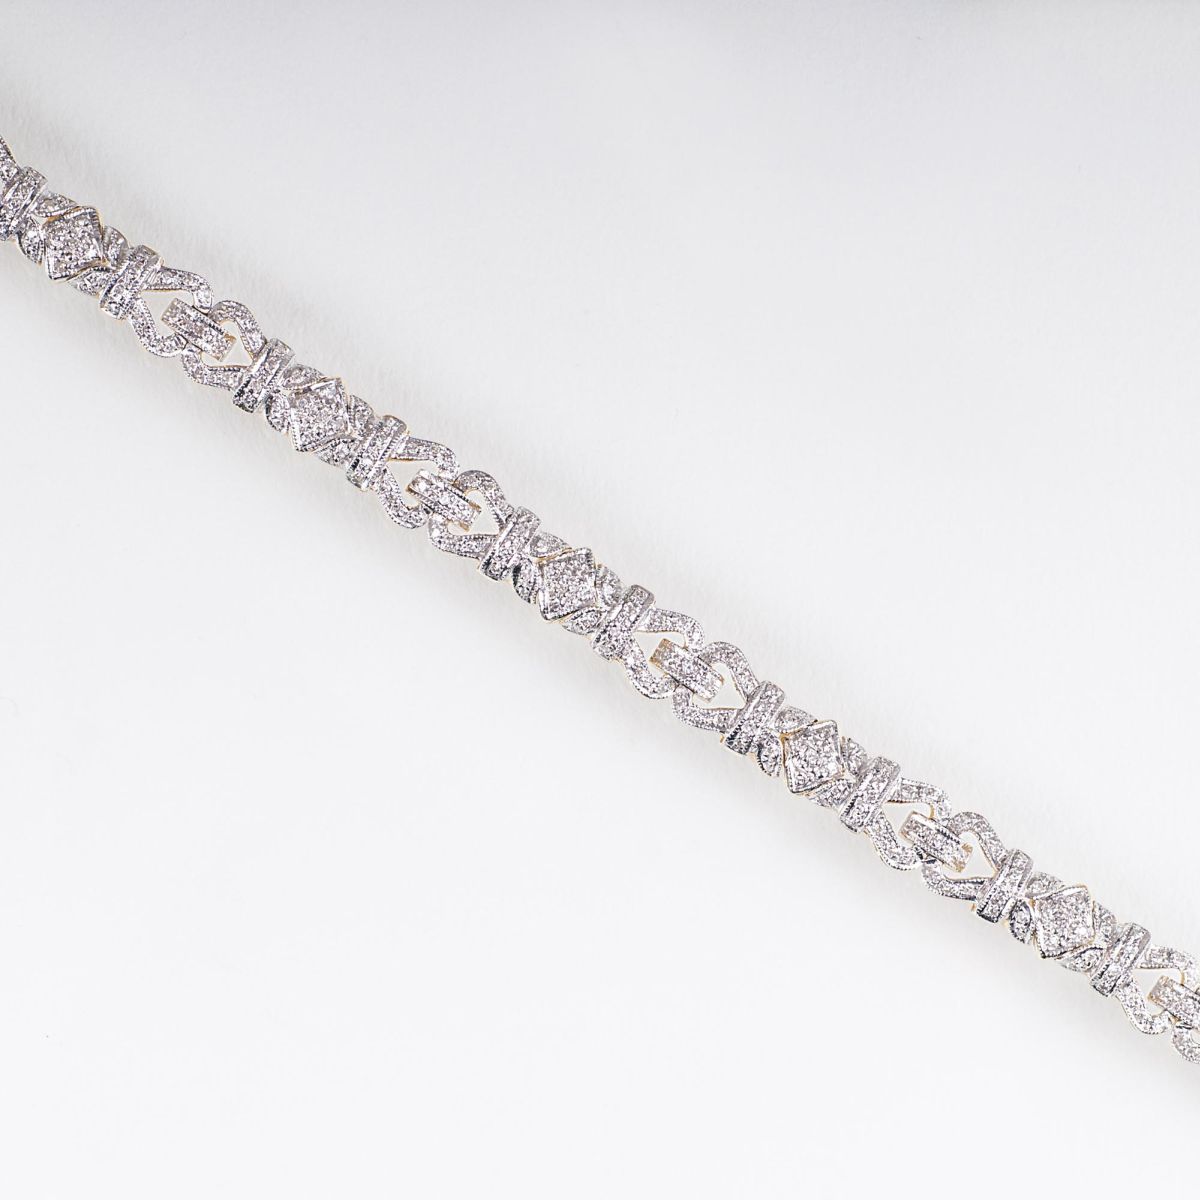 A fine Diamond Bracelet in the style of Art-déco